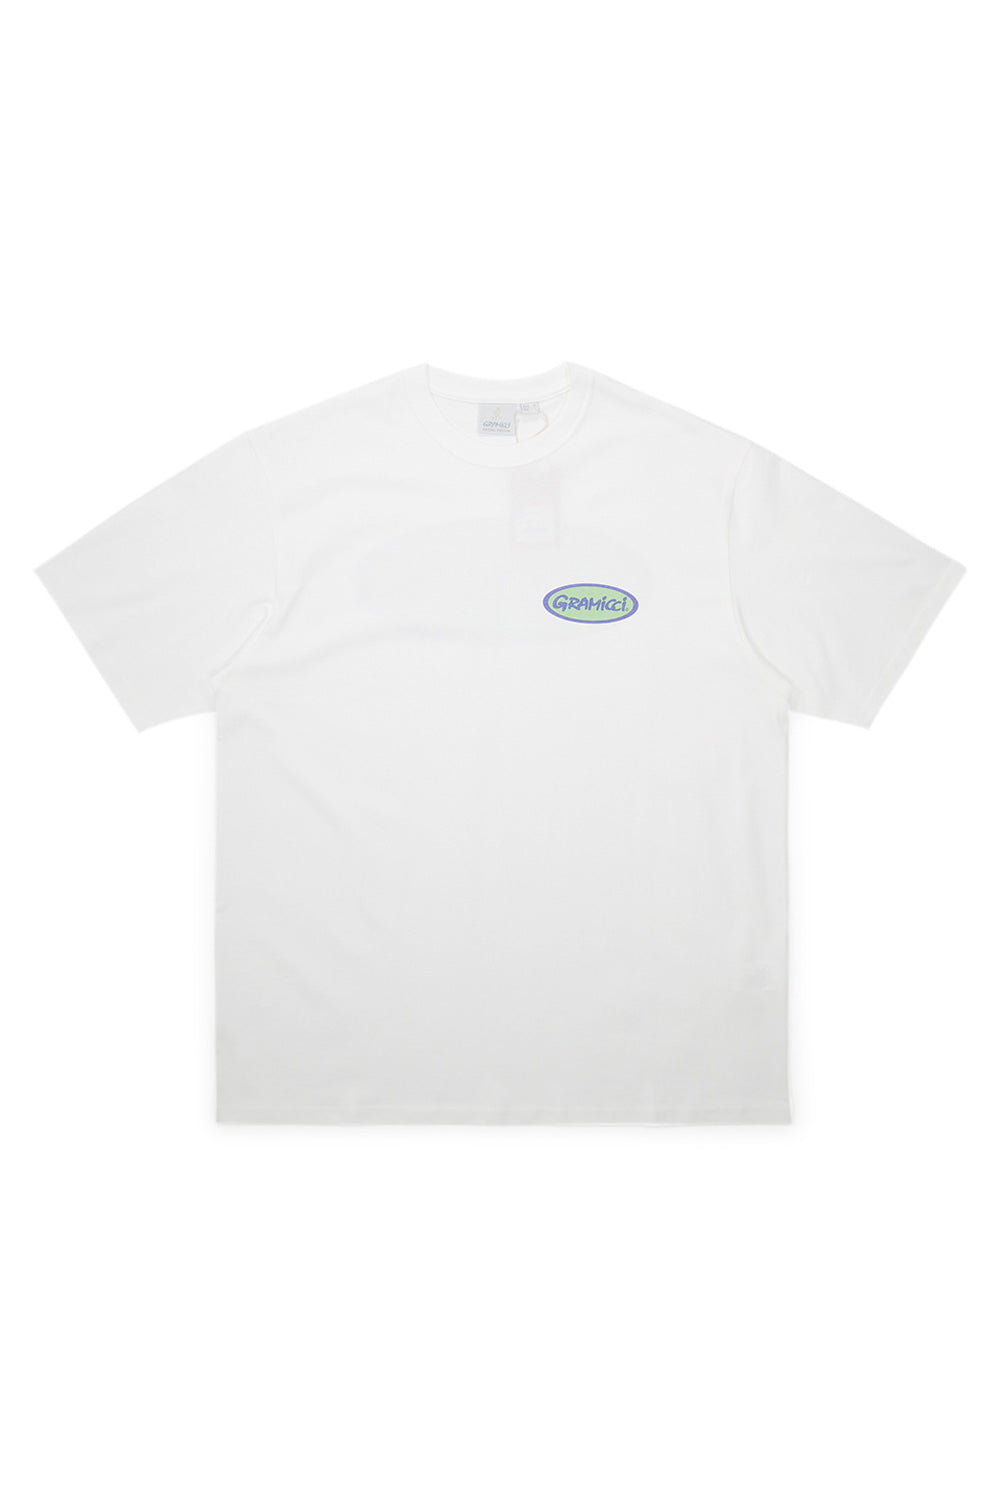 Gramicci Oval T-Shirt White - BONKERS